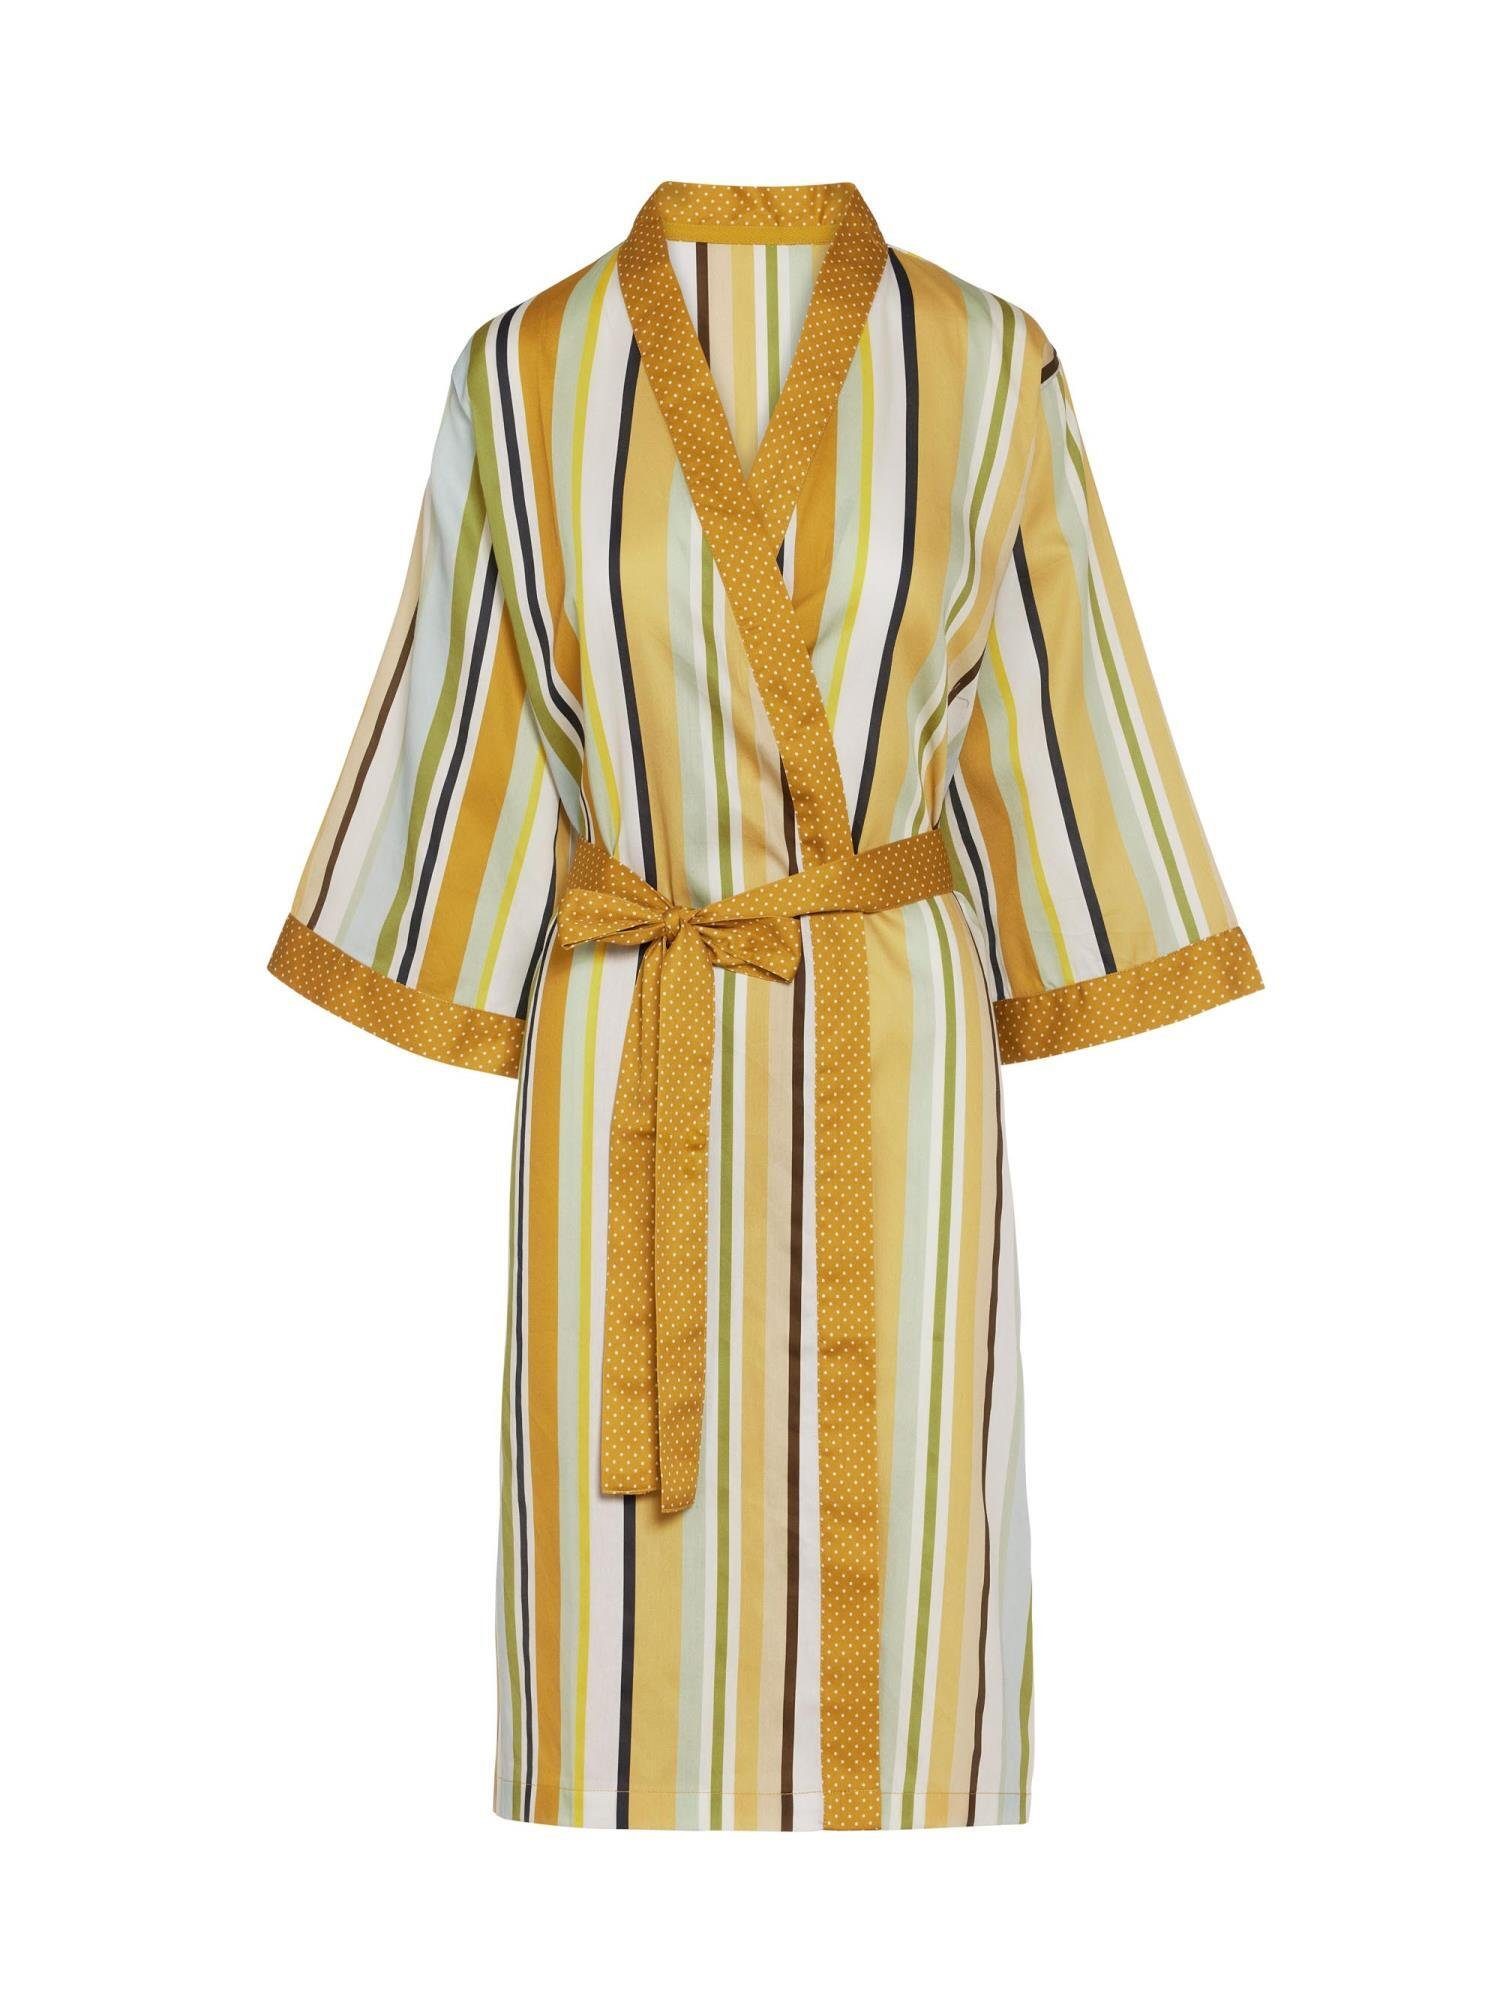 Essenza Kimono Sarai Feija, Kurzform, Baumwolle, Kimono-Kragen, Gürtel, mit Streifen | Damen Bademäntel